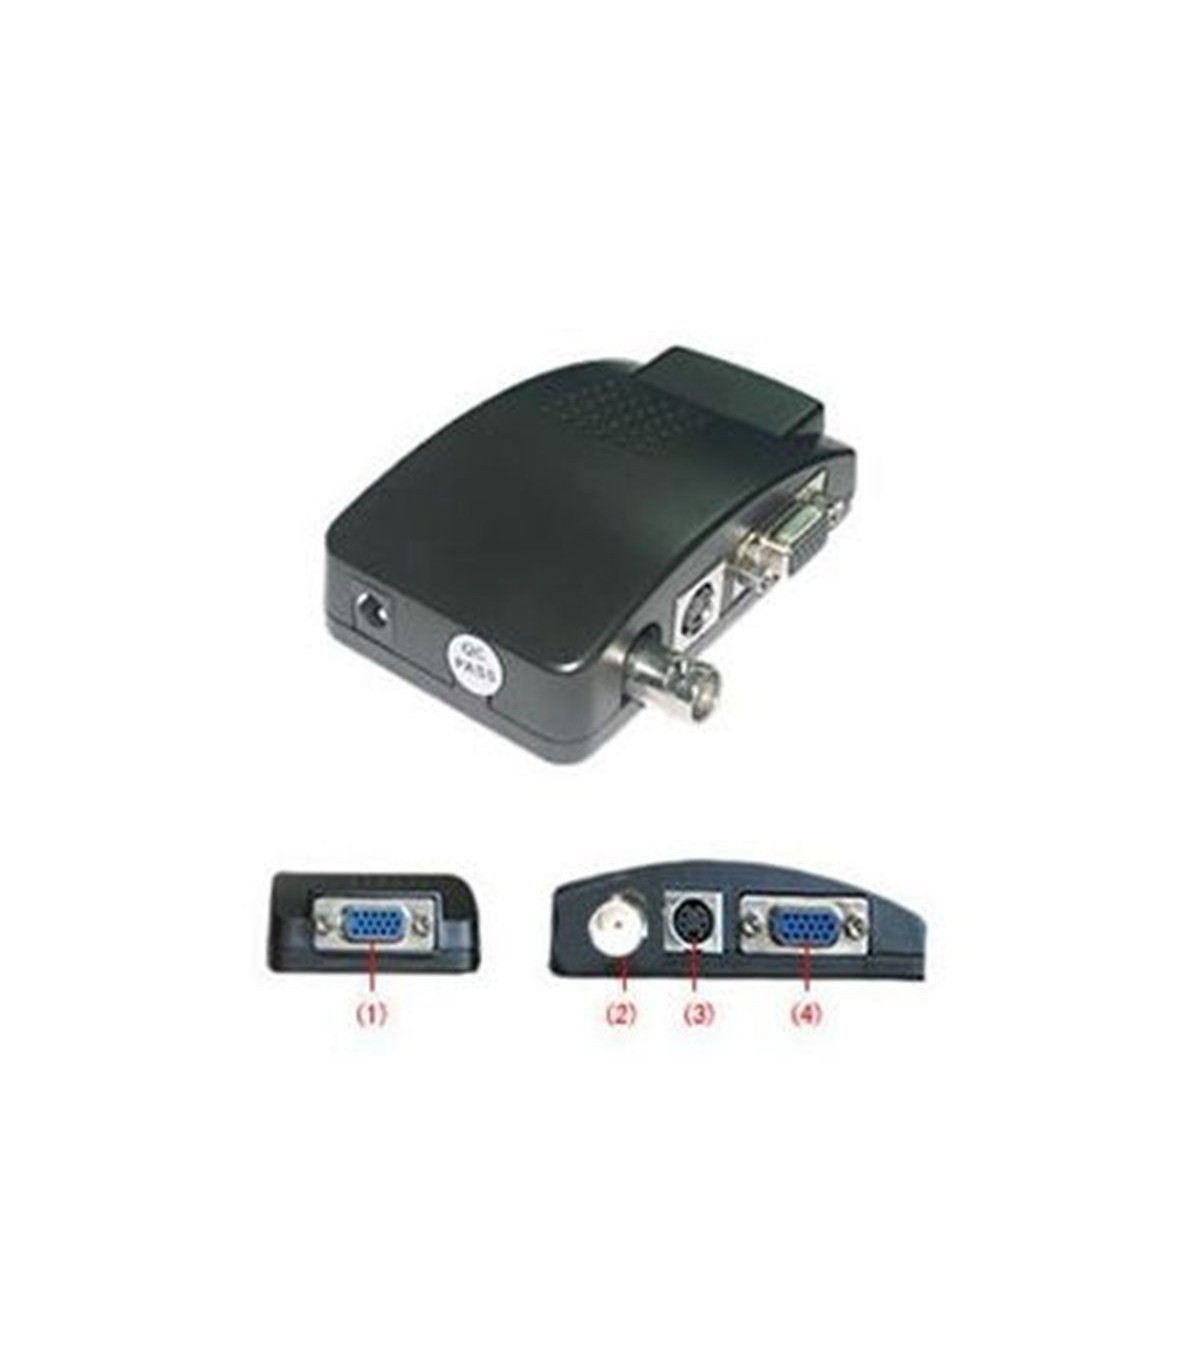 USB2VGAE3 ADAPTADOR DE VIDEO EXTERNO USB A VGA - CABLE CONVERSOR - TARJETA  GRAFICA EXTERNA - Accesorios - Camaras de Seguridad Y Control de Acceso